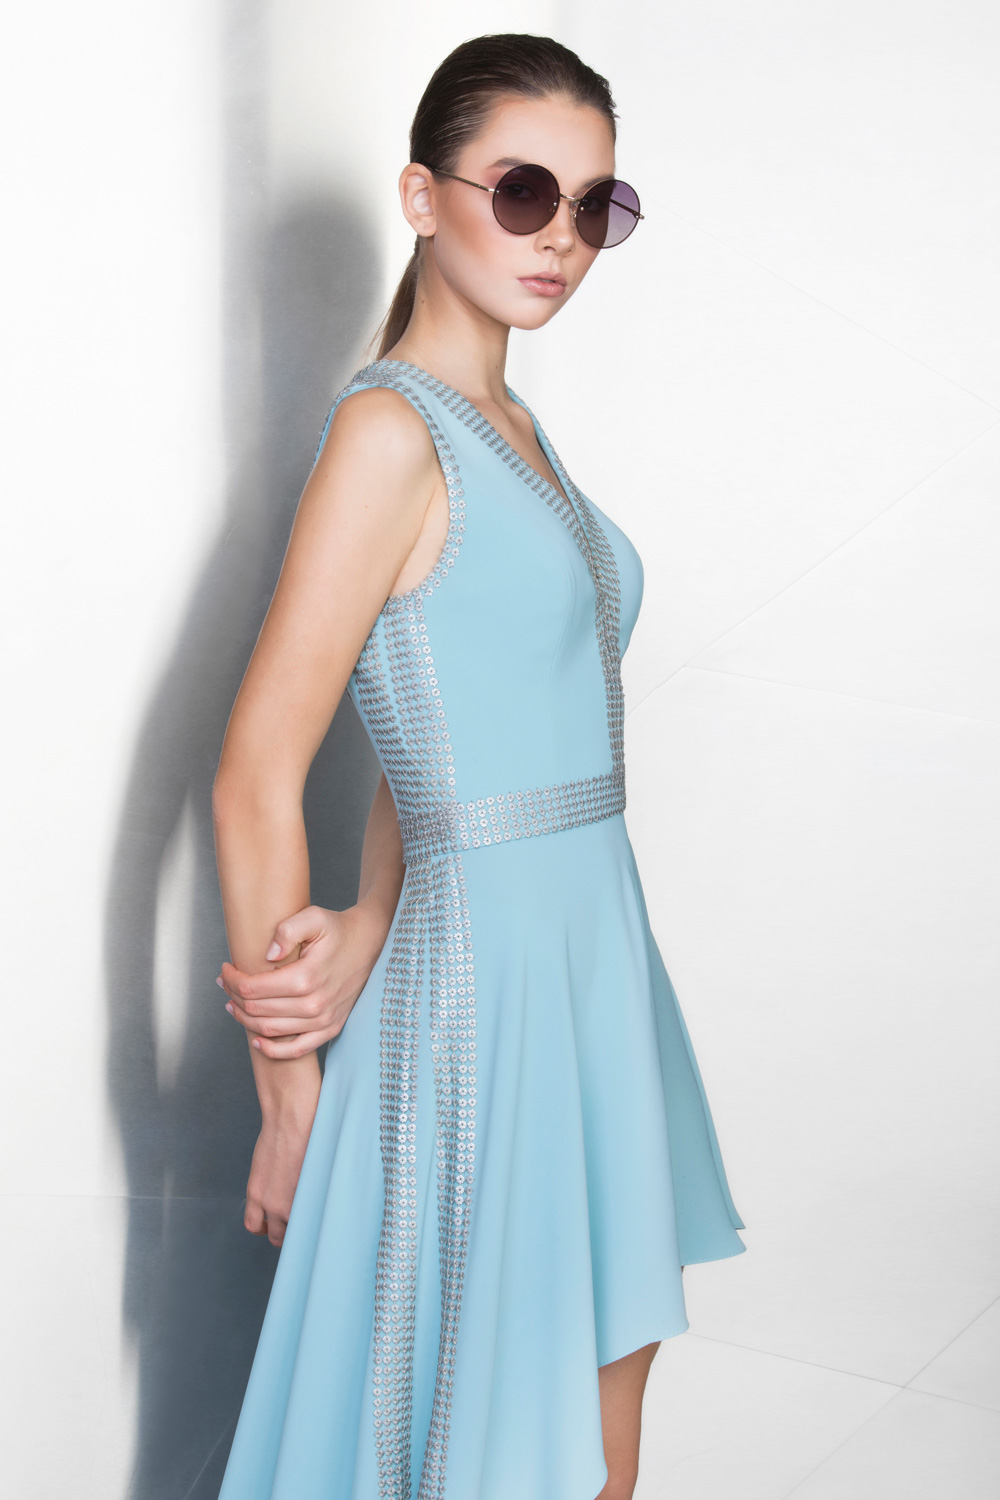 Sky blue short dress - Fashion Designer